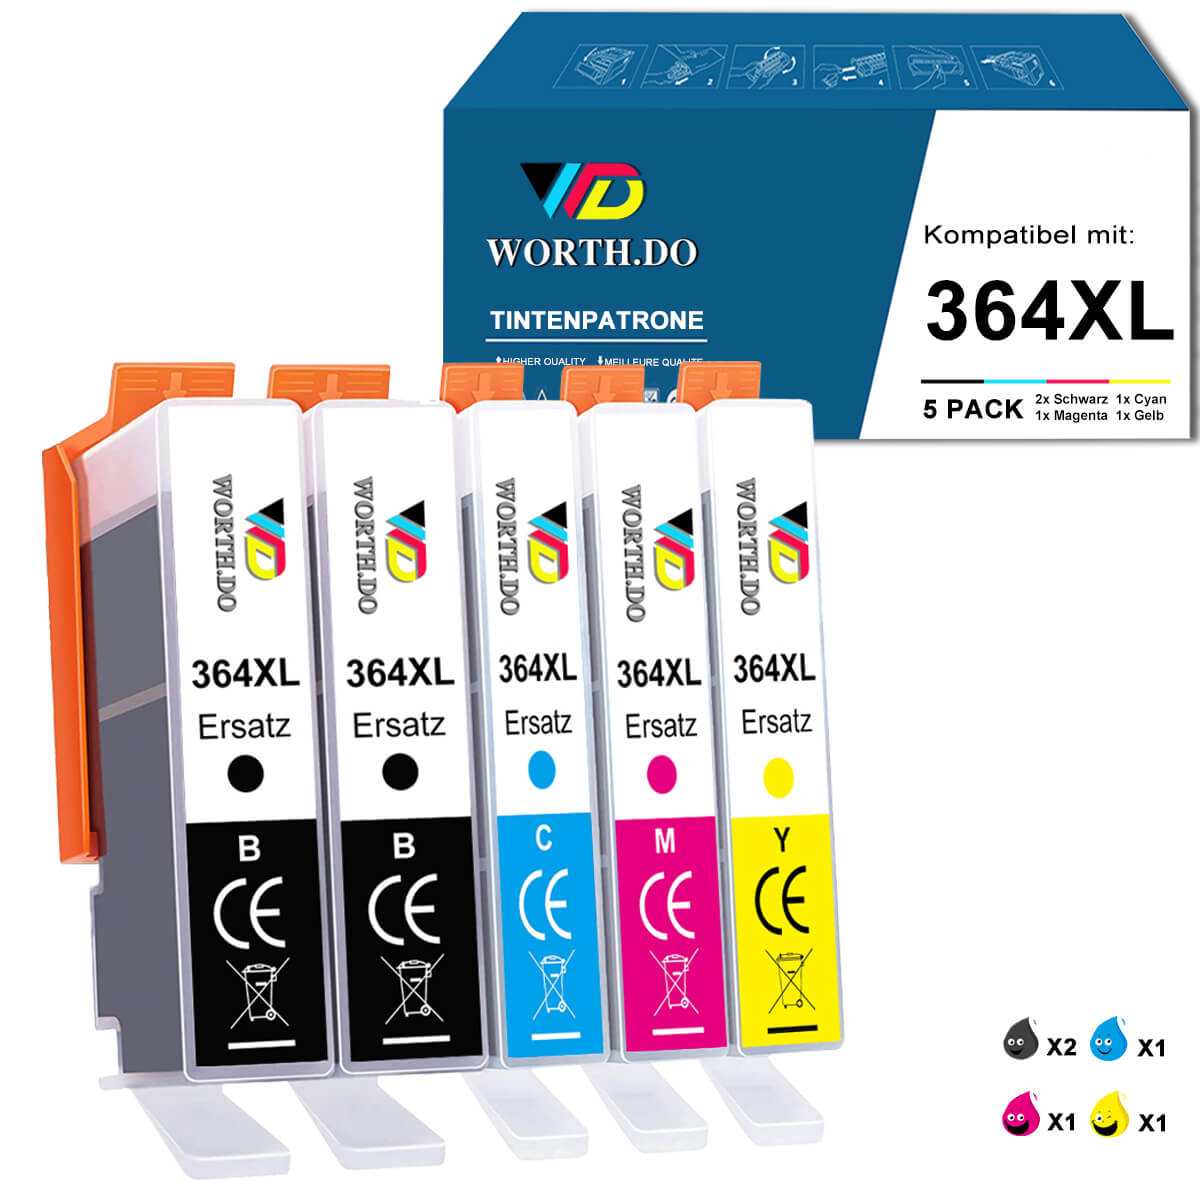 HP 364 XL Druckerpatronen Multipack günstig kaufen ▷ worthdo.de –